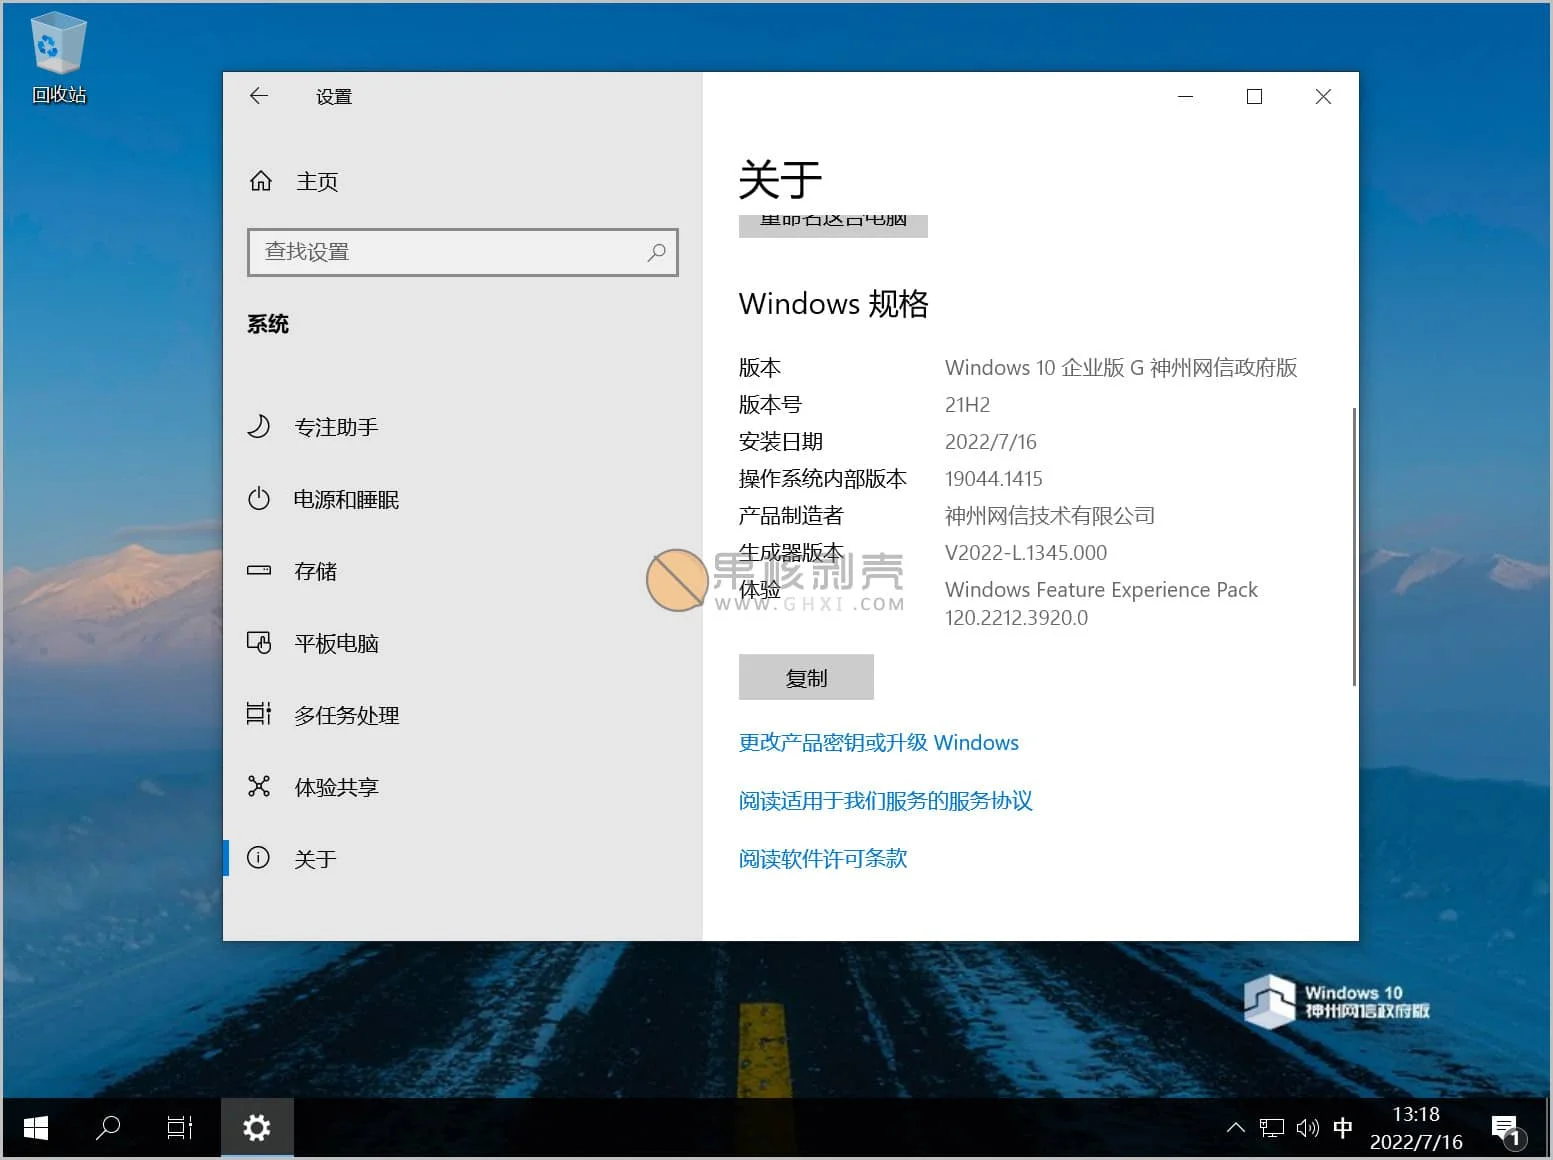 Windows 10 v2022-L.1345 神州网信政府版 ISO镜像下载